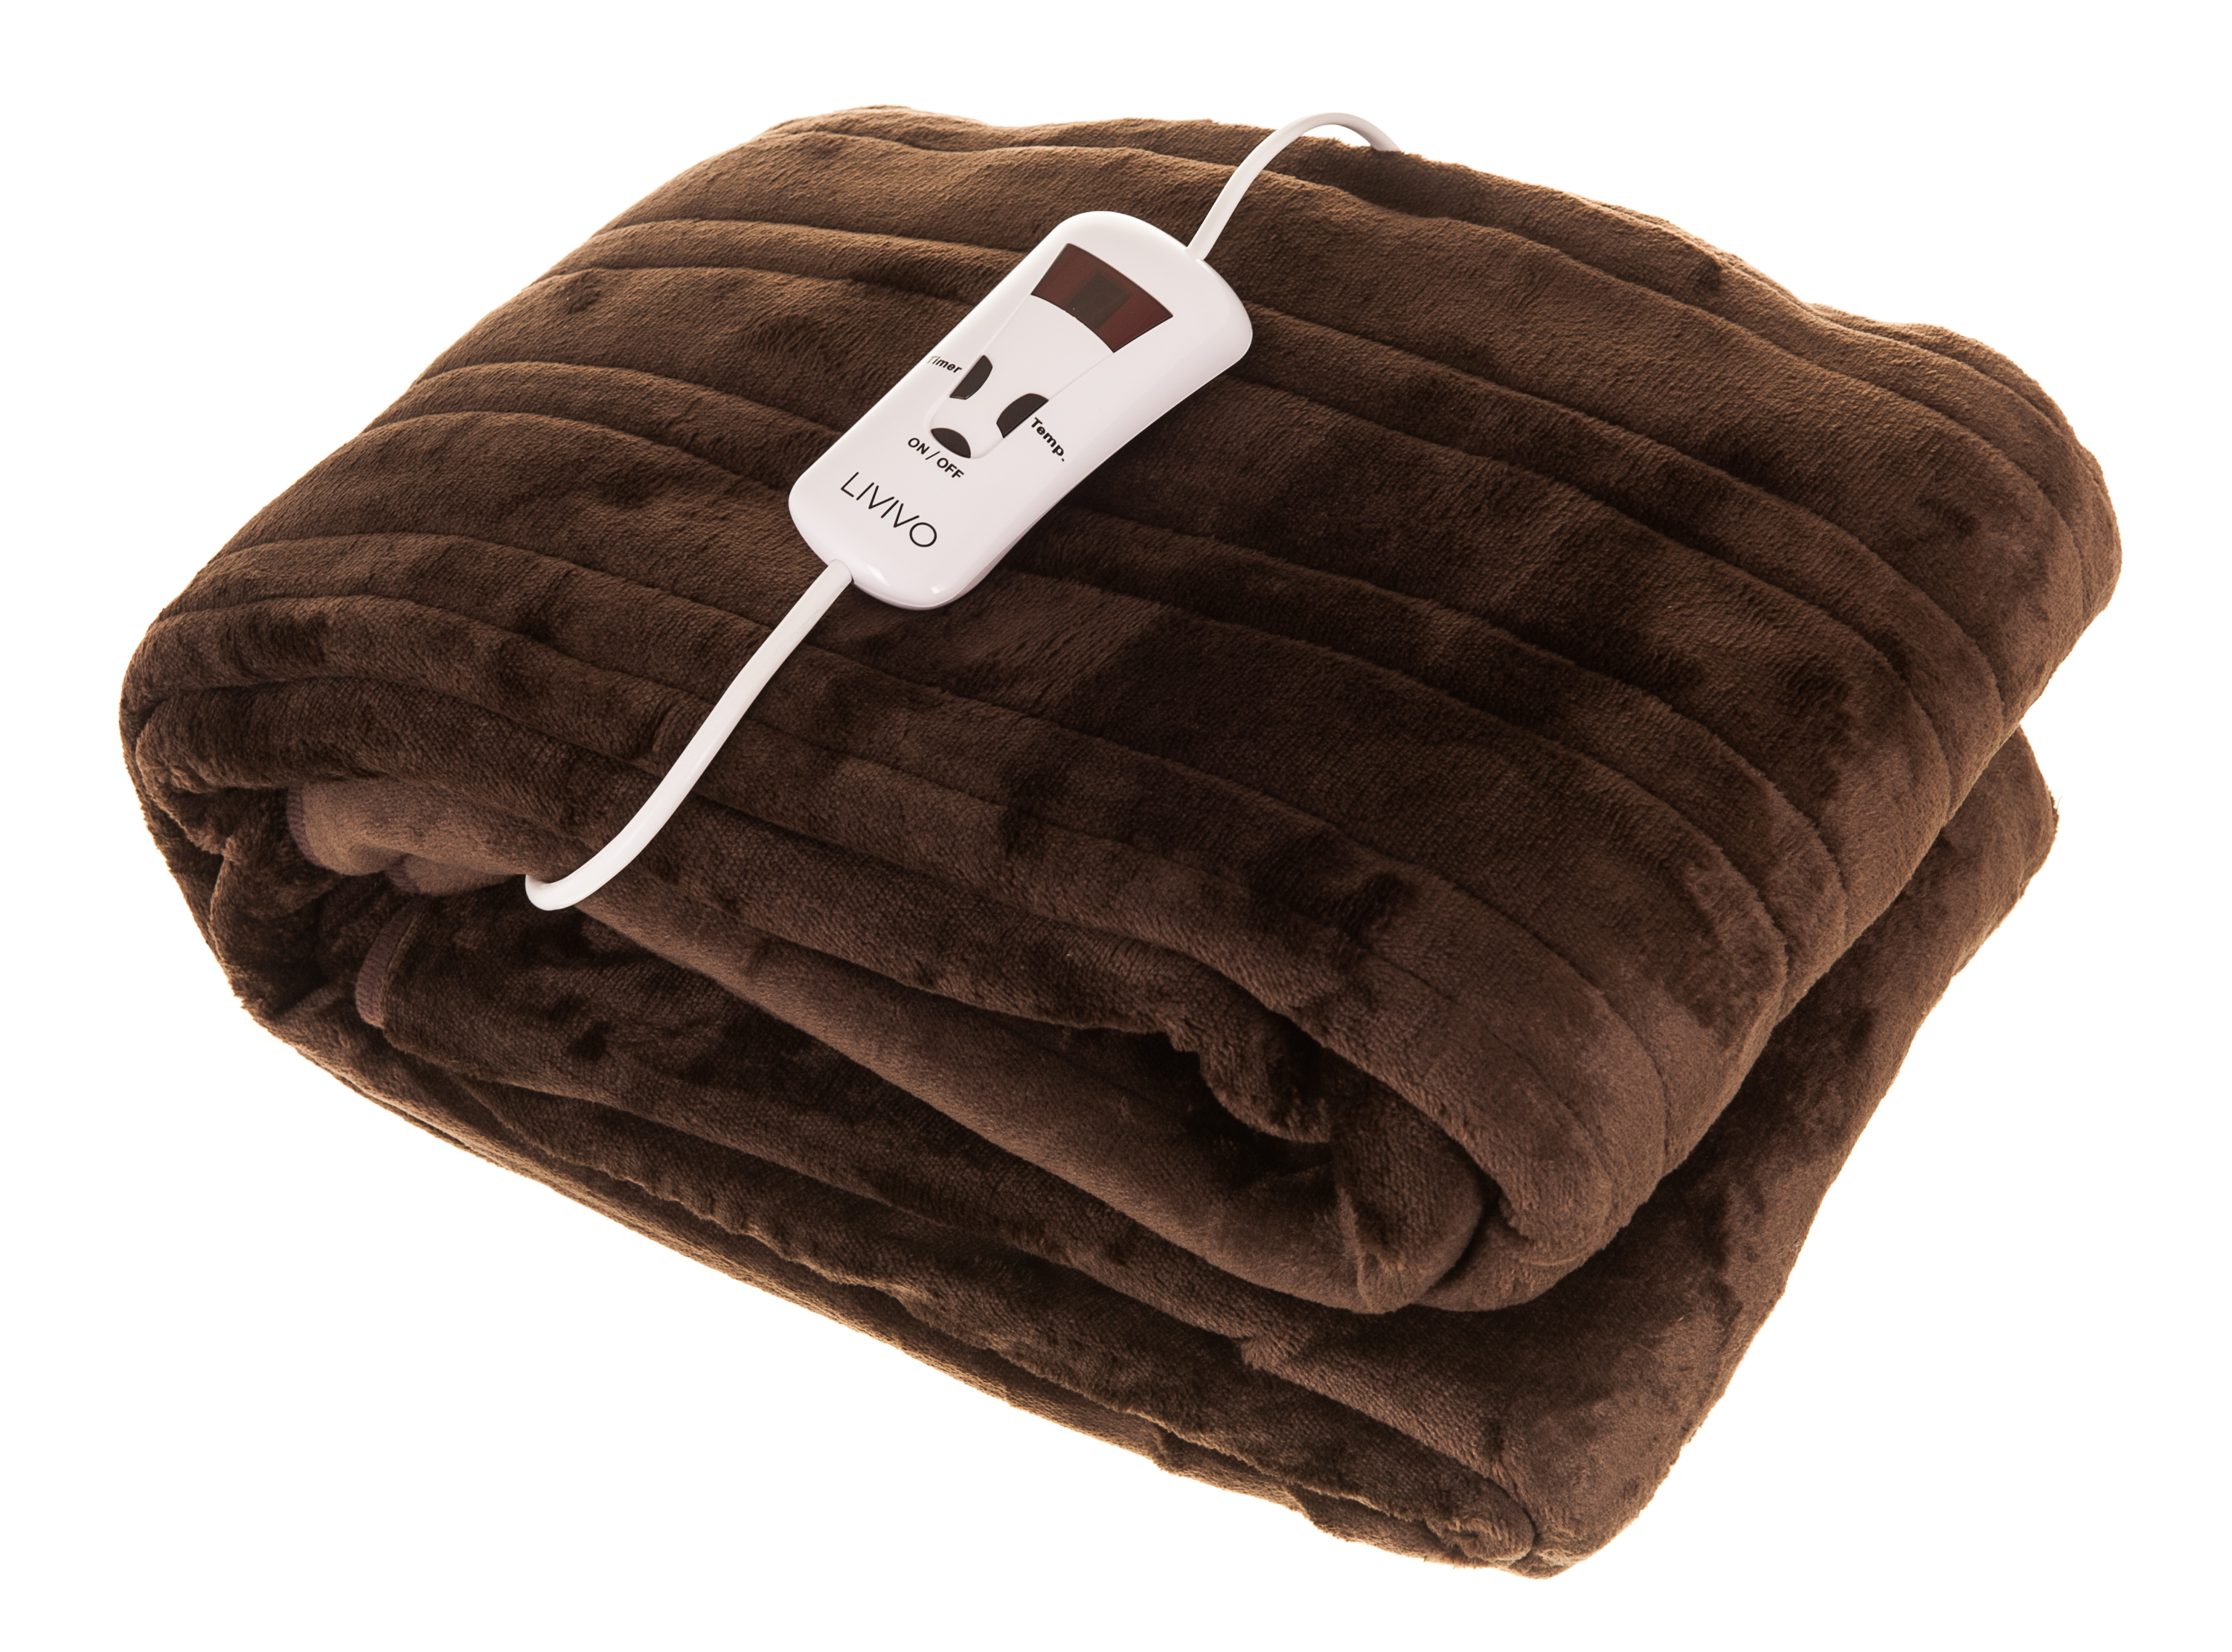 electric blanket under waterproof mattress protector